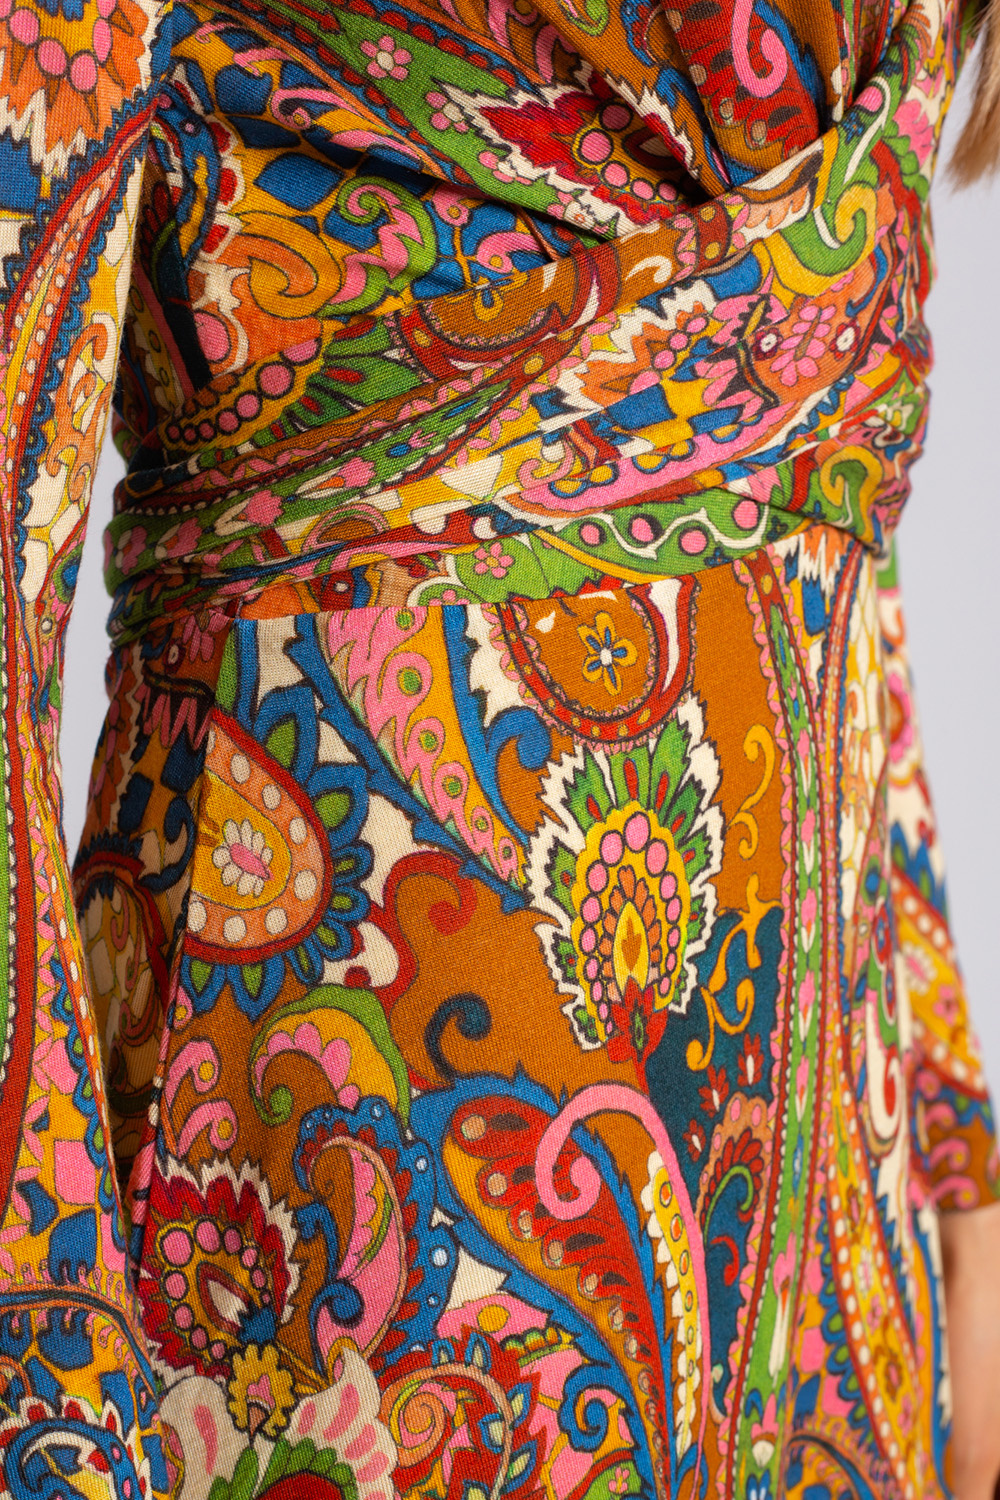 Etro Patterned dress